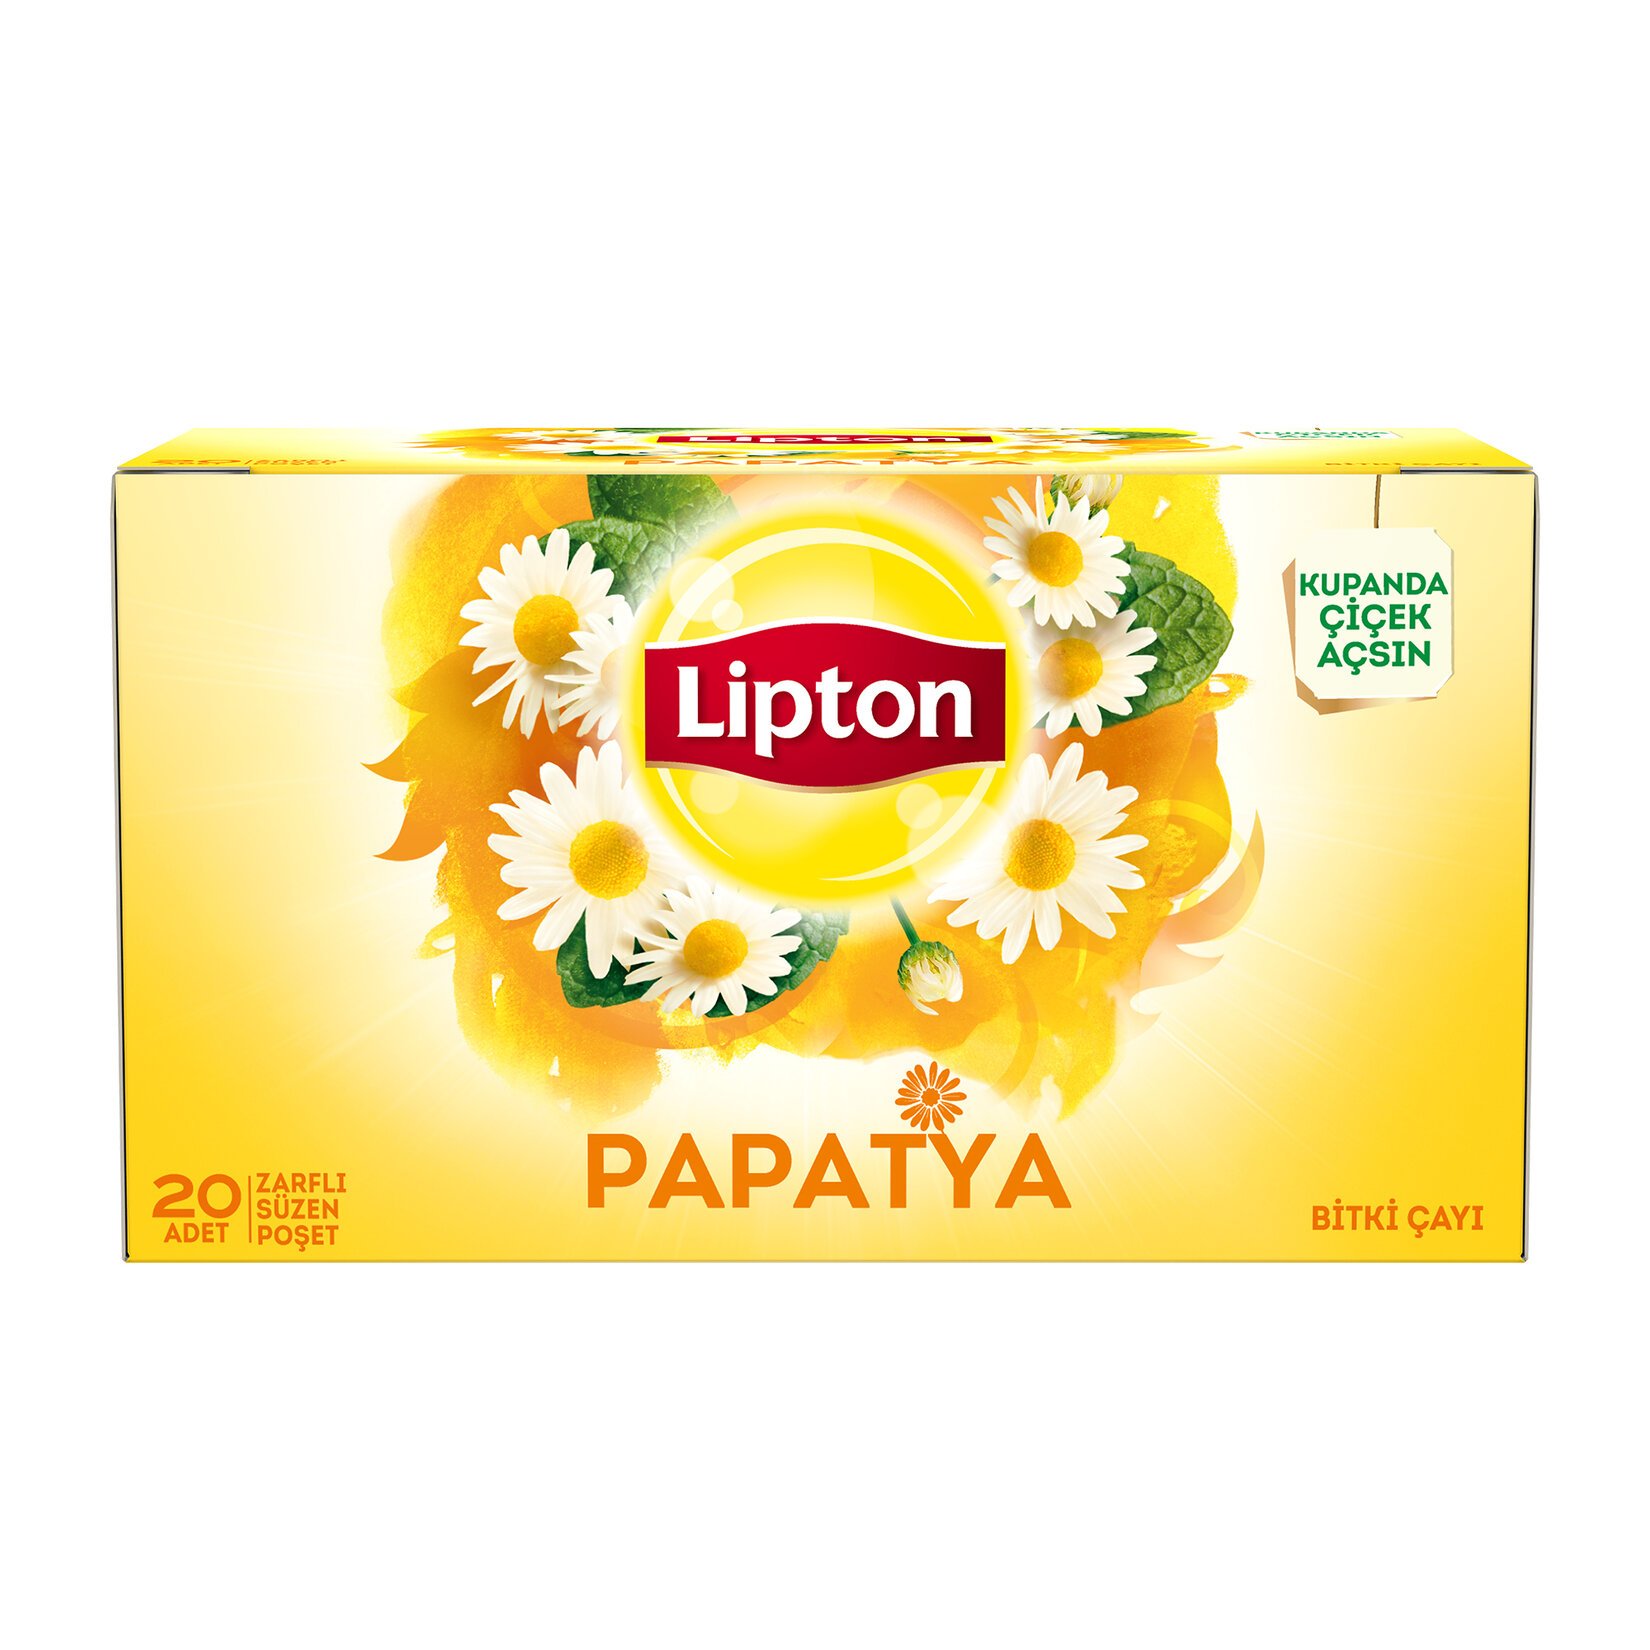 Lipton Bitki Çayı Papatya 20'li